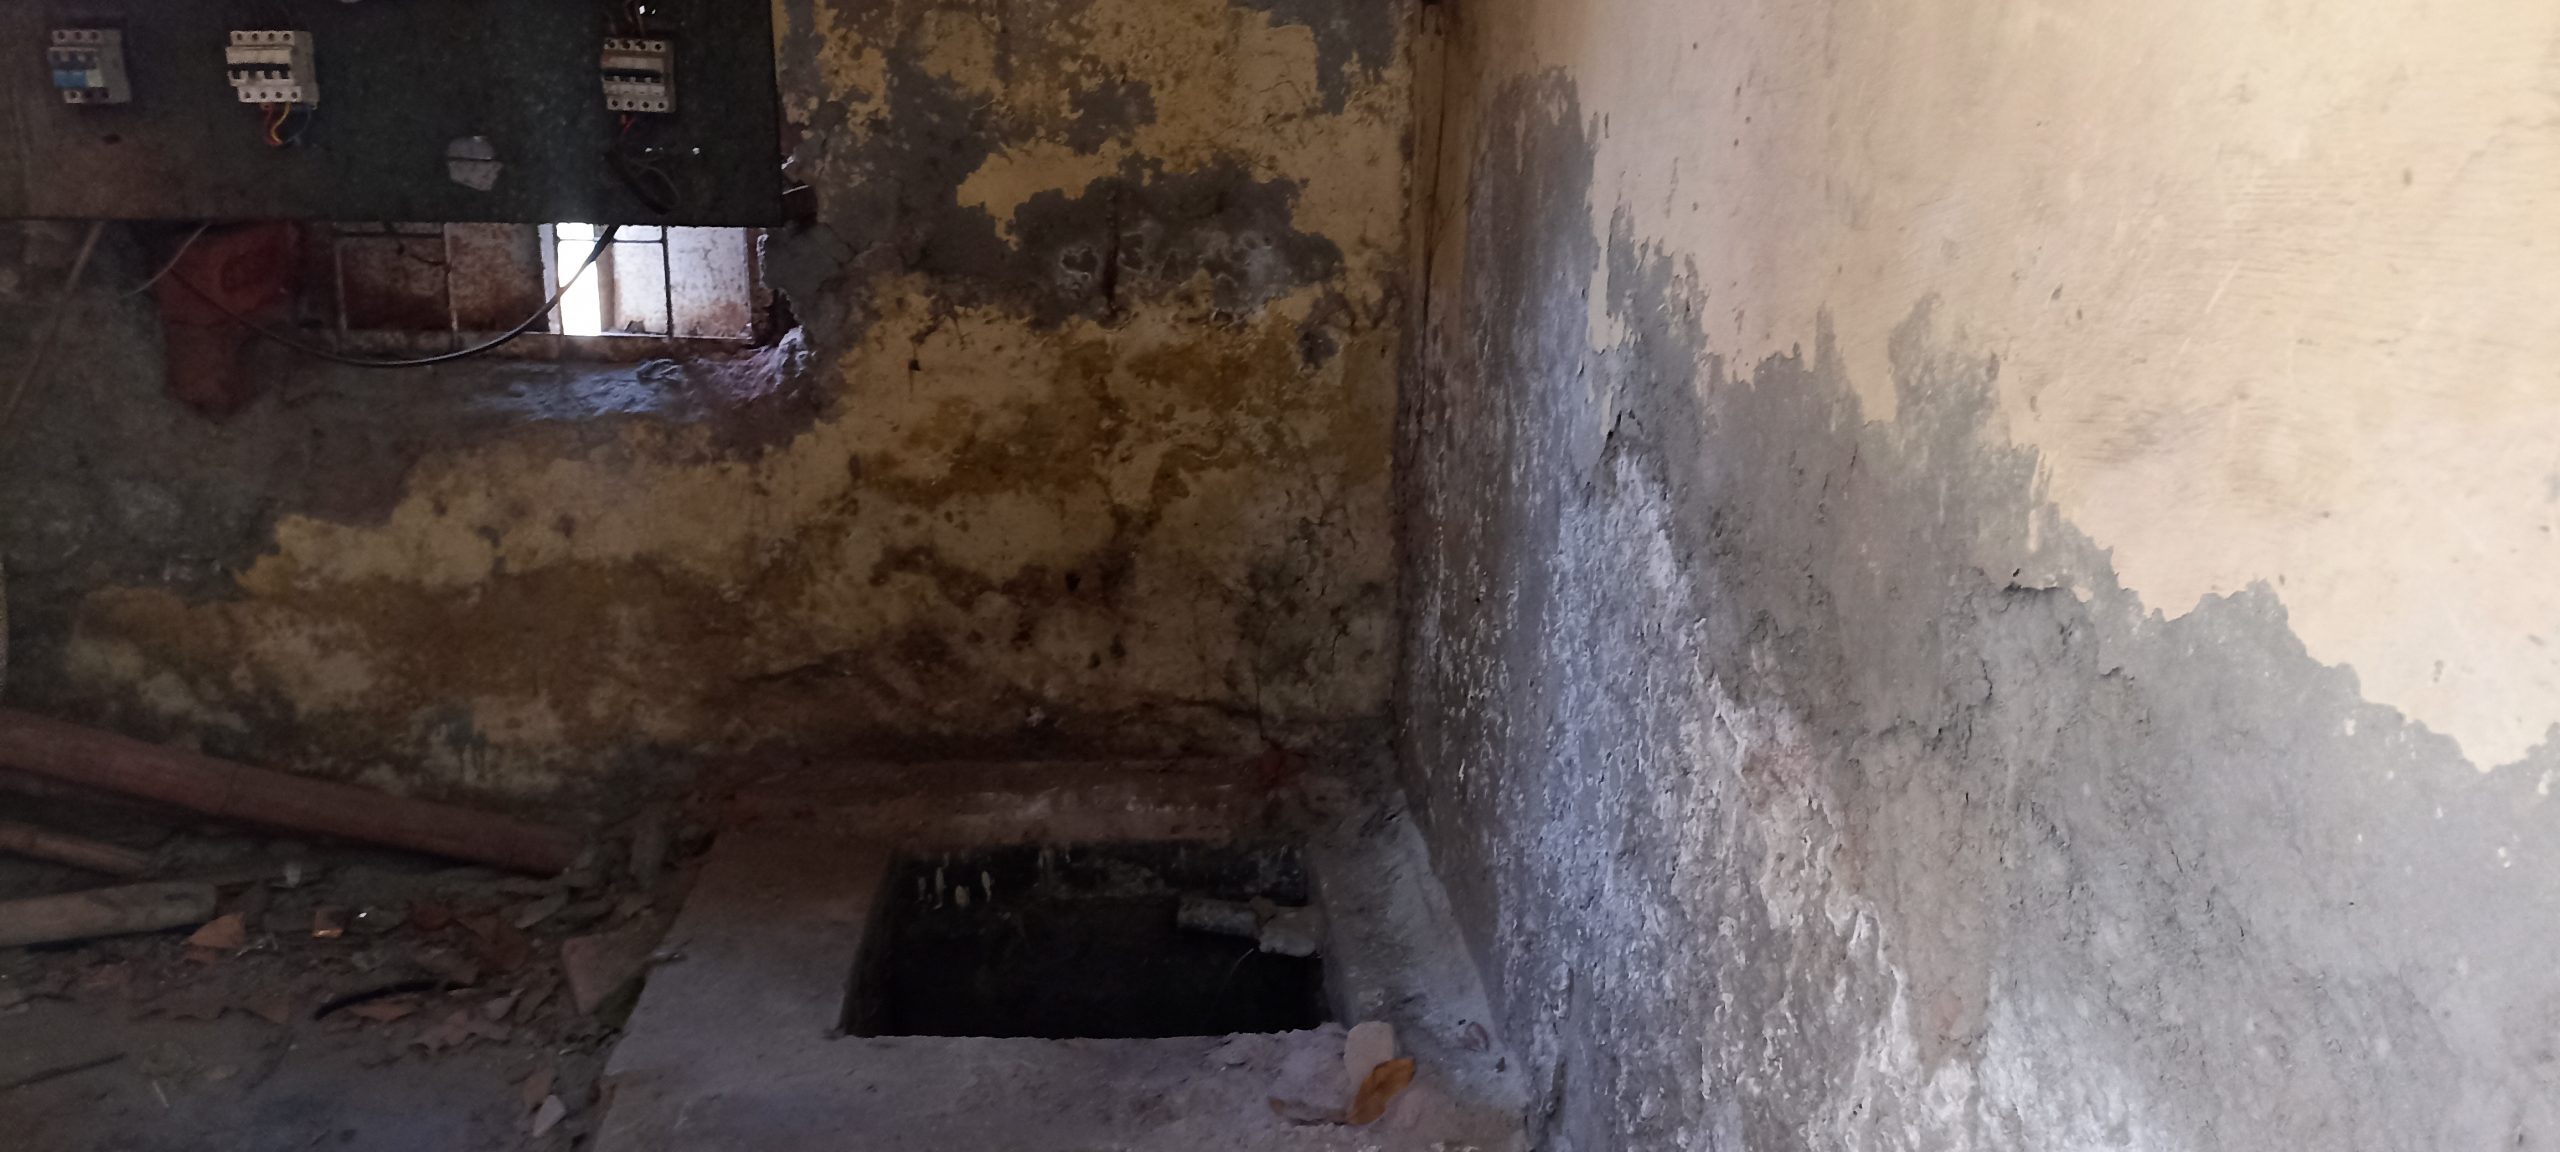 Death traps: The unsealed borewells in West Delhi